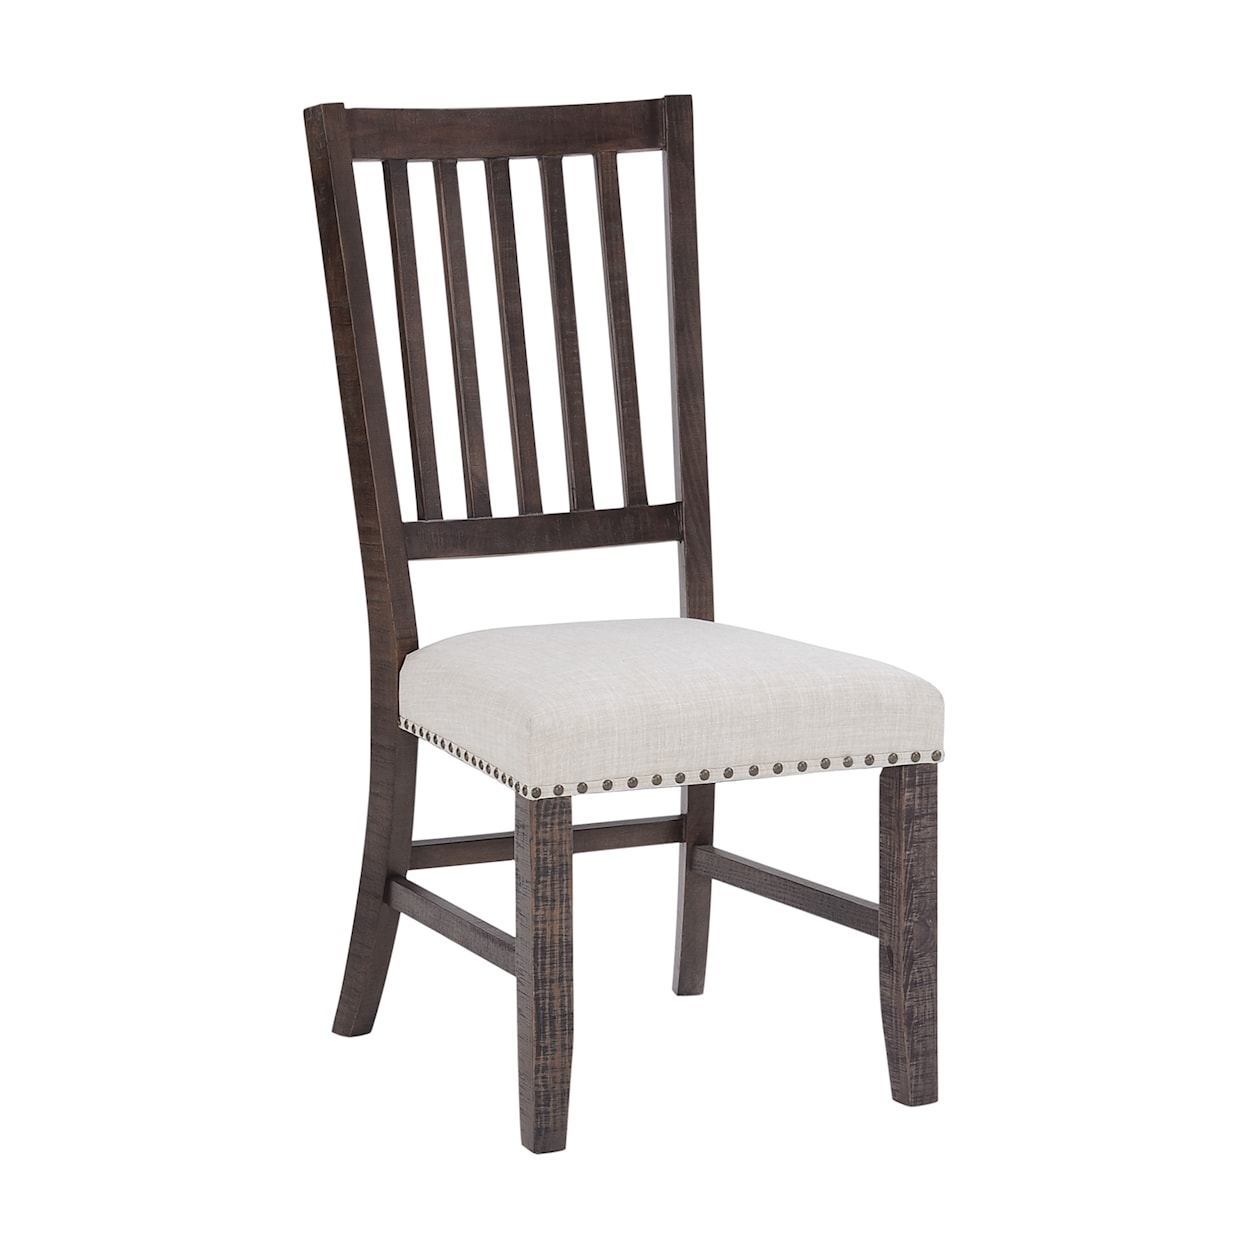 Jofran Willow Creek Slatback Chair